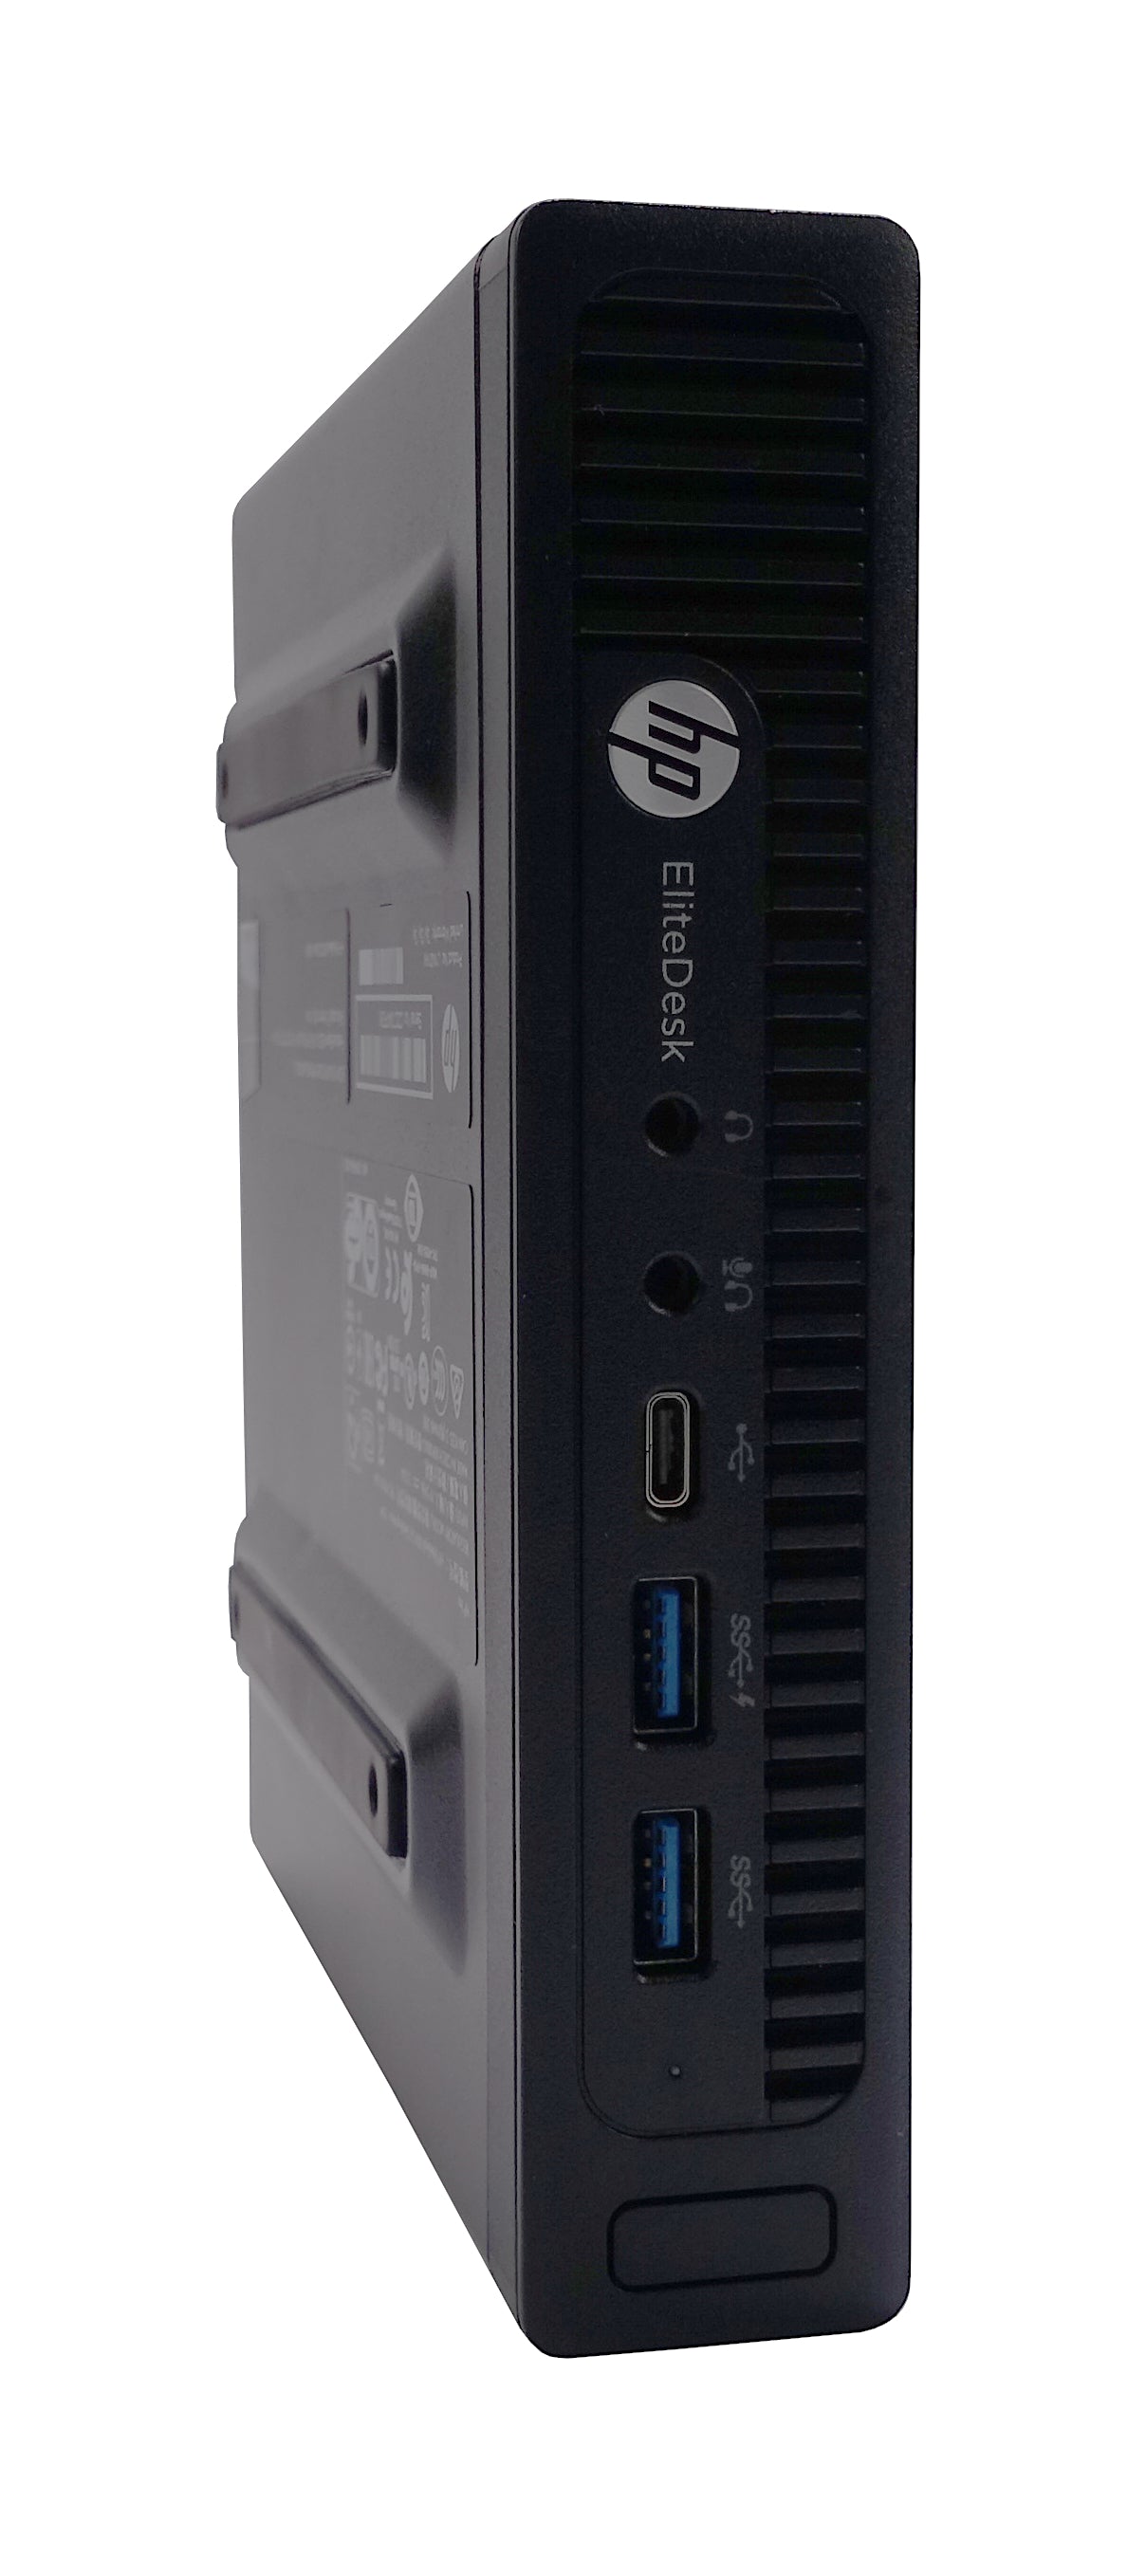 HP EliteDesk 800 G2 Micro PC, Core i5 6th Gen, 8GB RAM, 128GB SSD